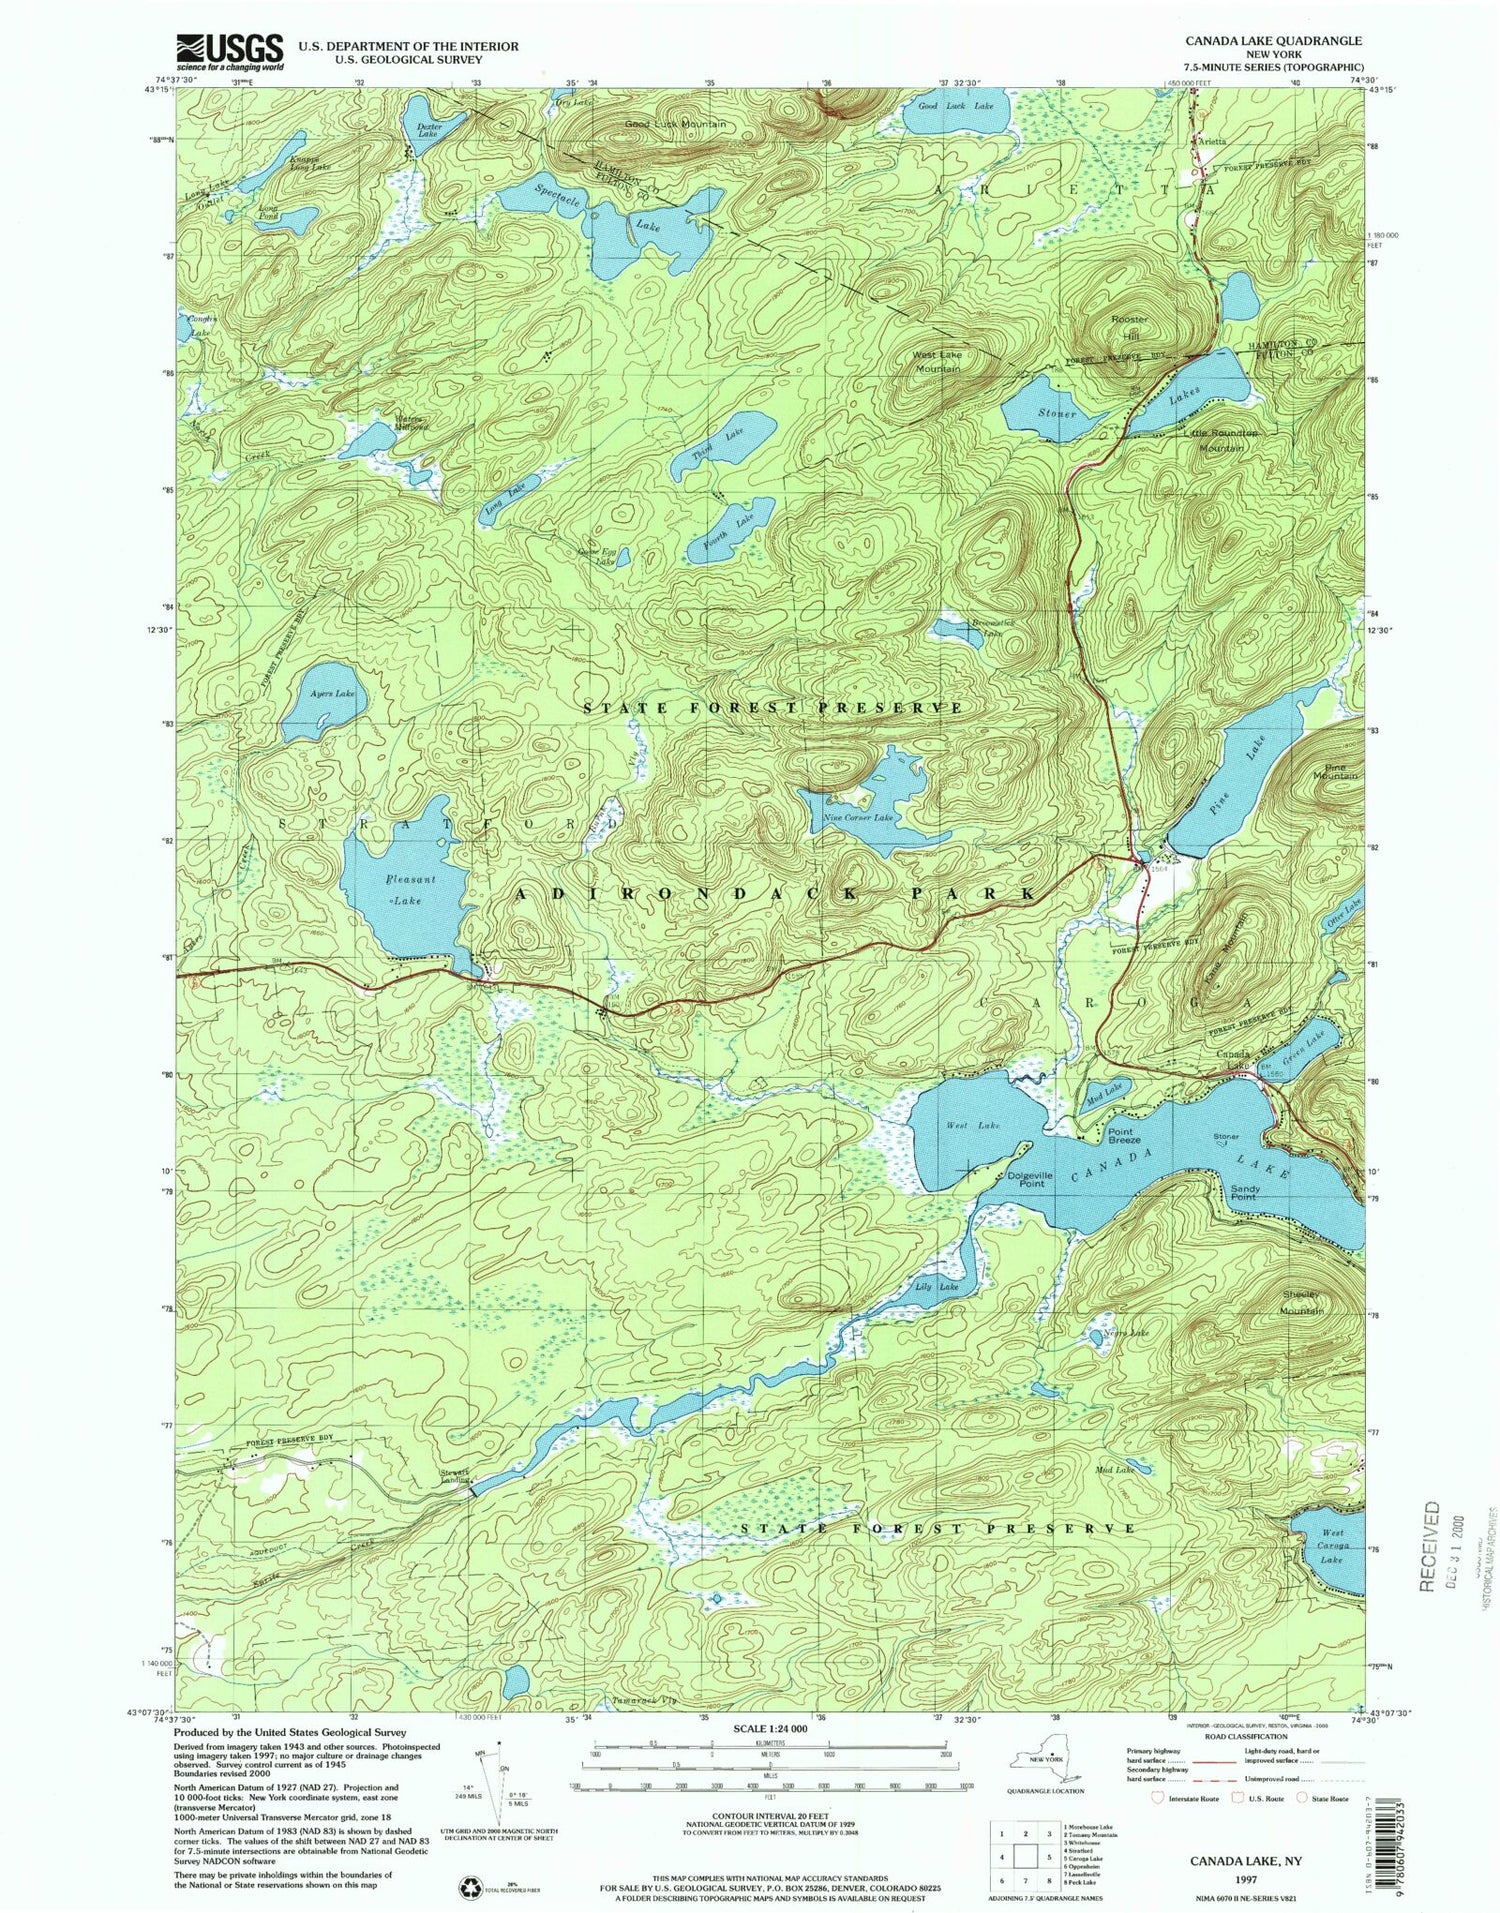 Classic USGS Canada Lake New York 7.5'x7.5' Topo Map Image